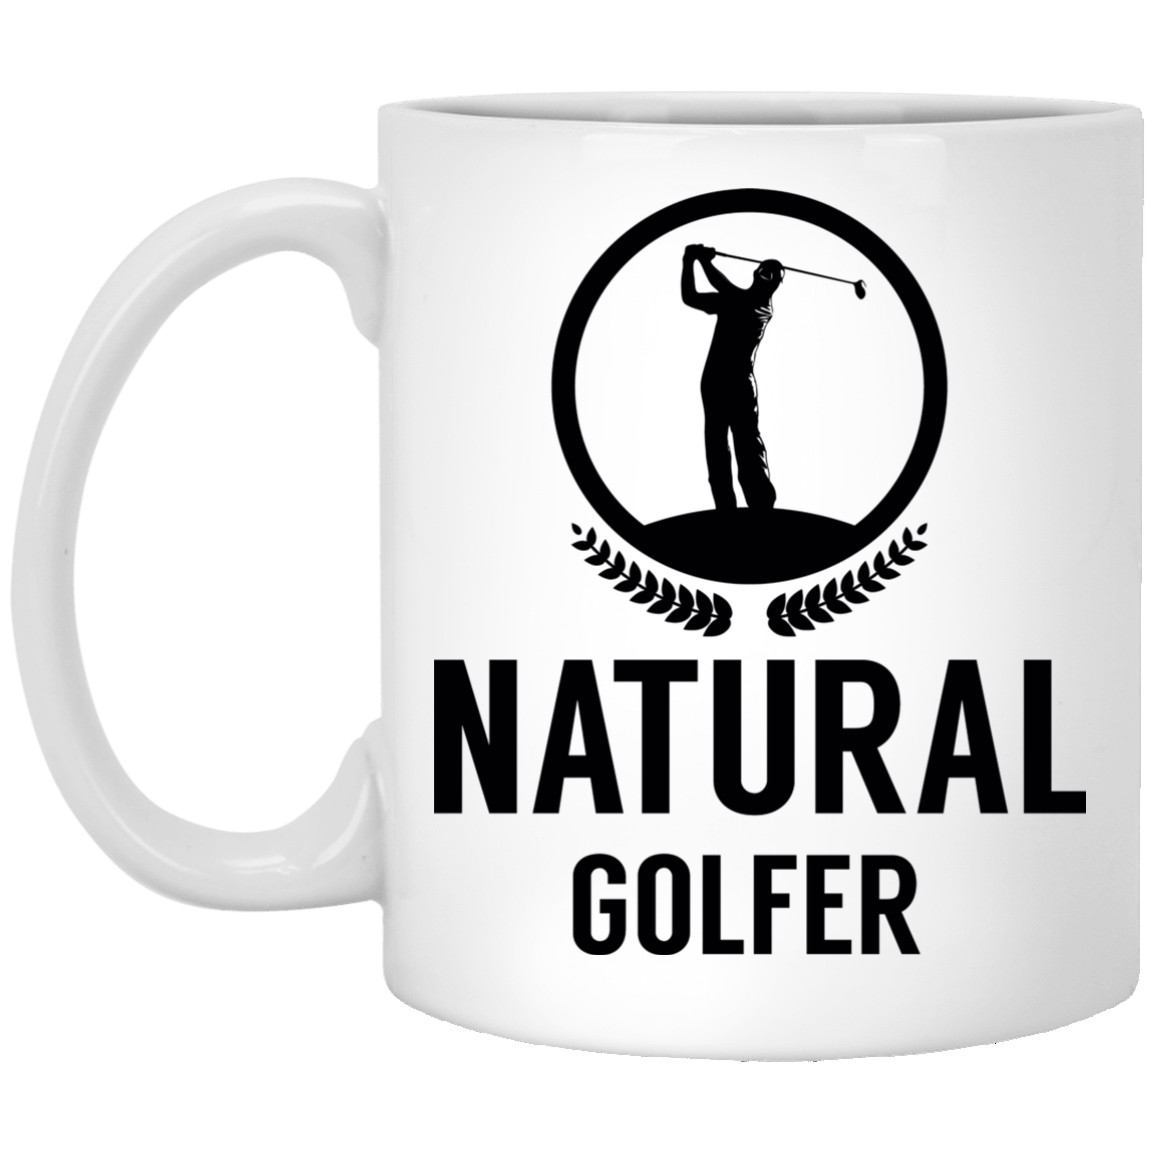 11 oz. Natural Golfer Mug